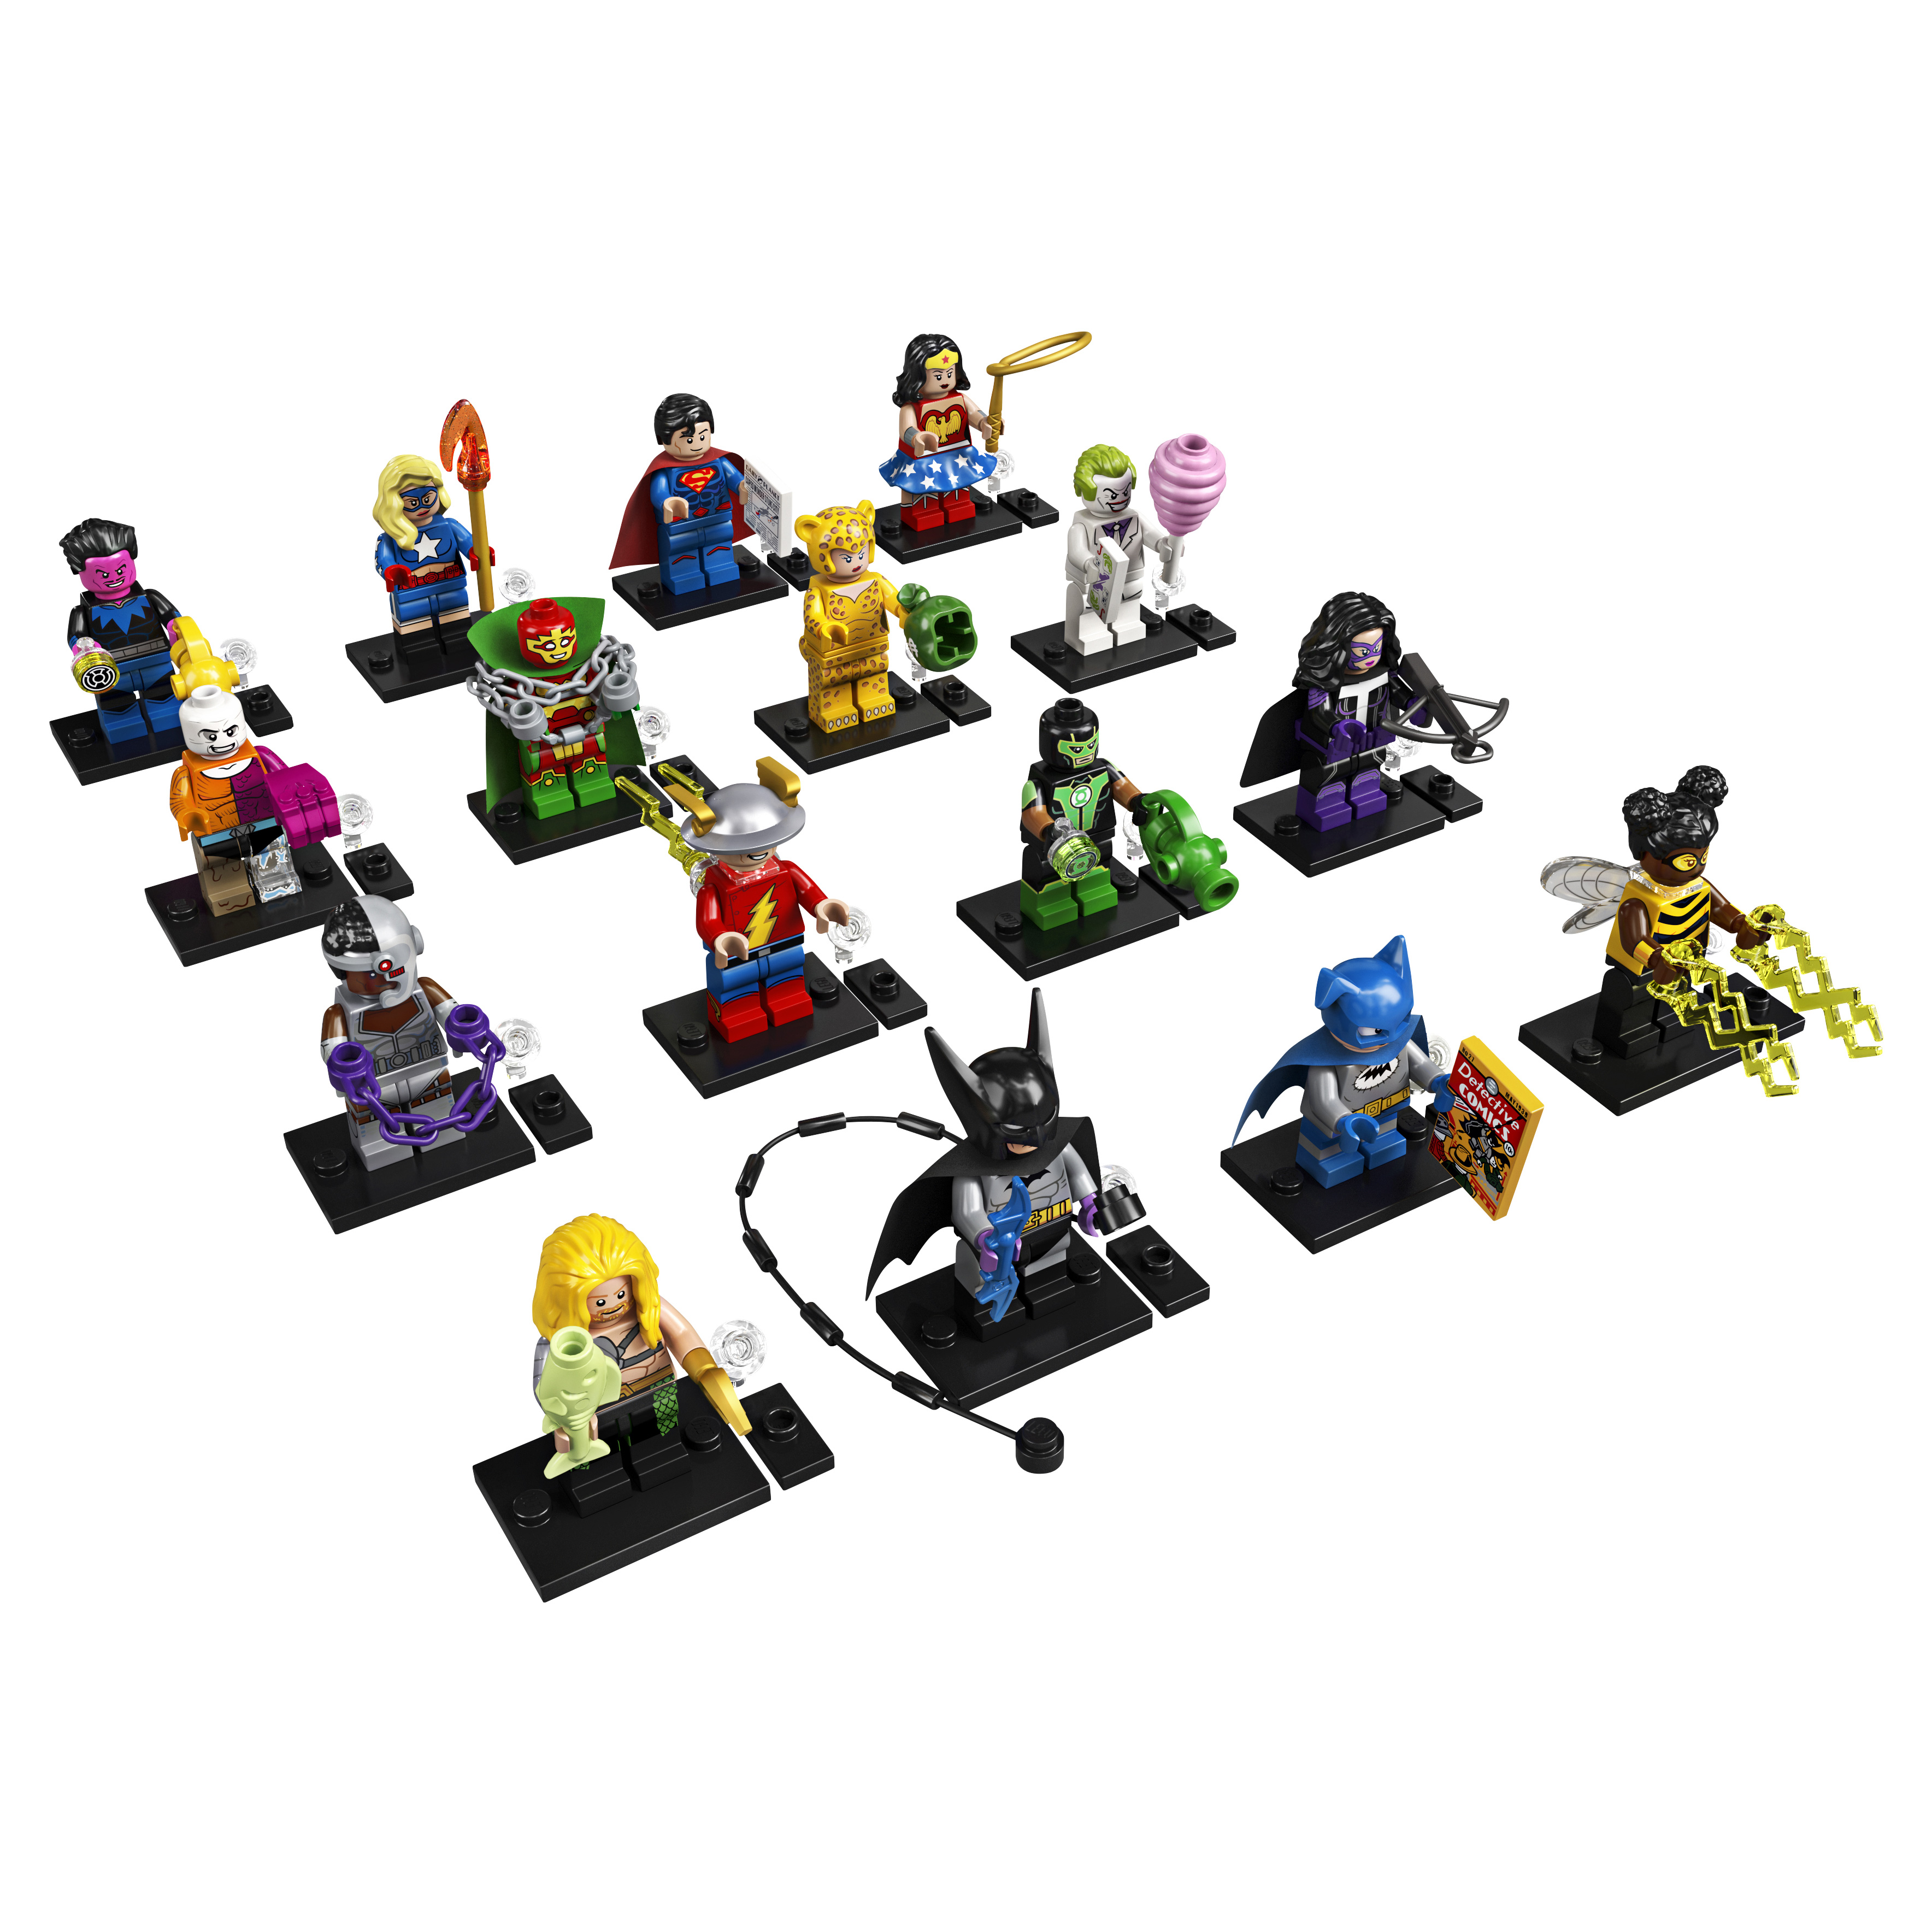 Конструктор LEGO Minifigures 71026 DC Super Heroes Series конструктор lego super heroes арсенал железного человека 76216